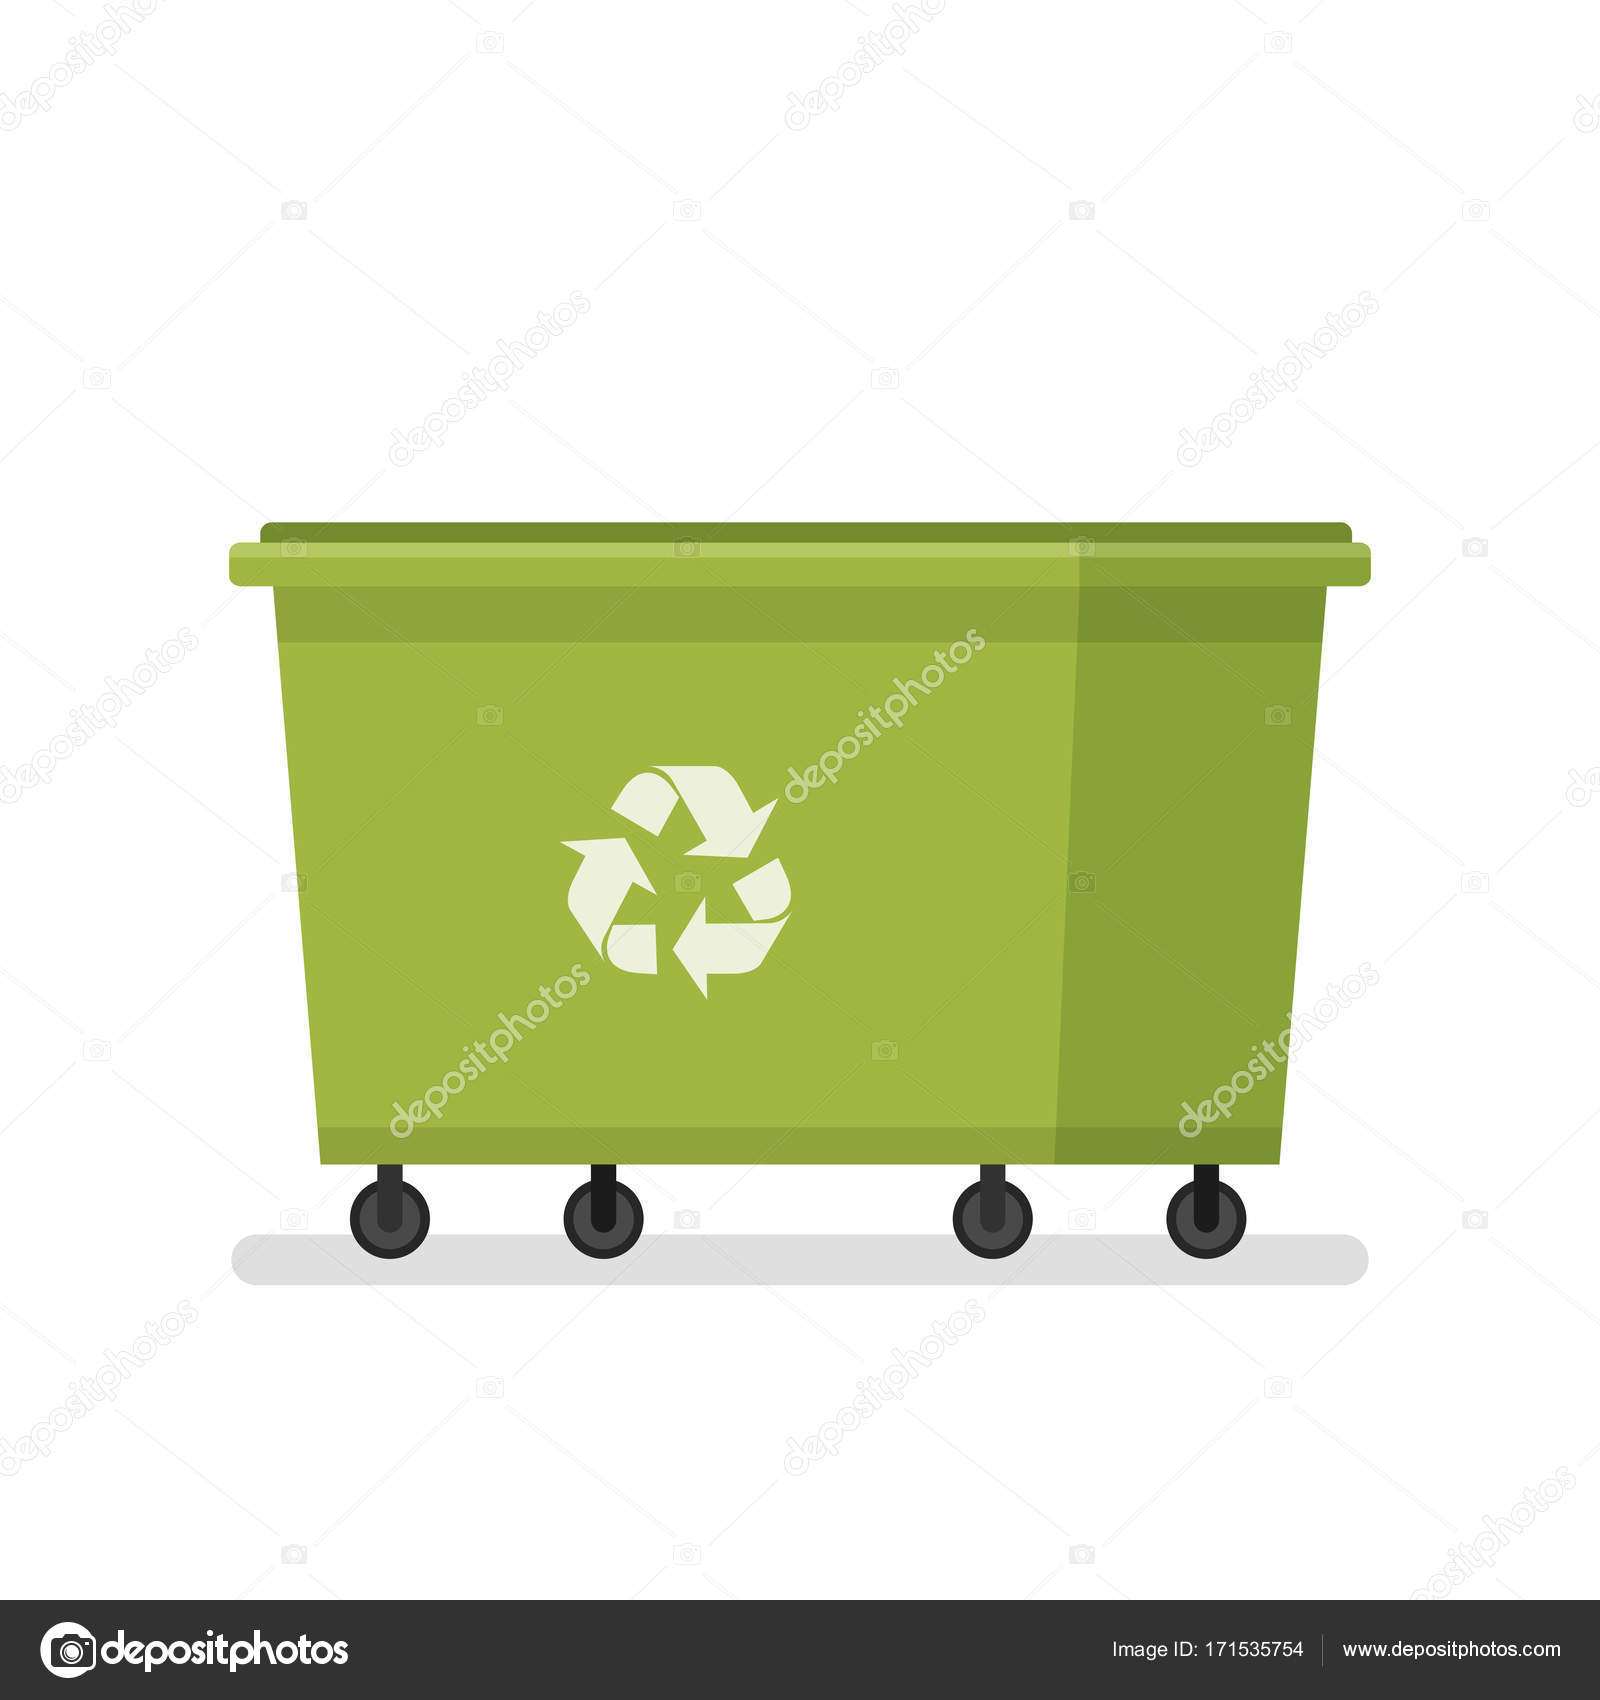 https://st3.depositphotos.com/5011263/17153/v/1600/depositphotos_171535754-stock-illustration-dumpster-large-garbage-can-utility.jpg